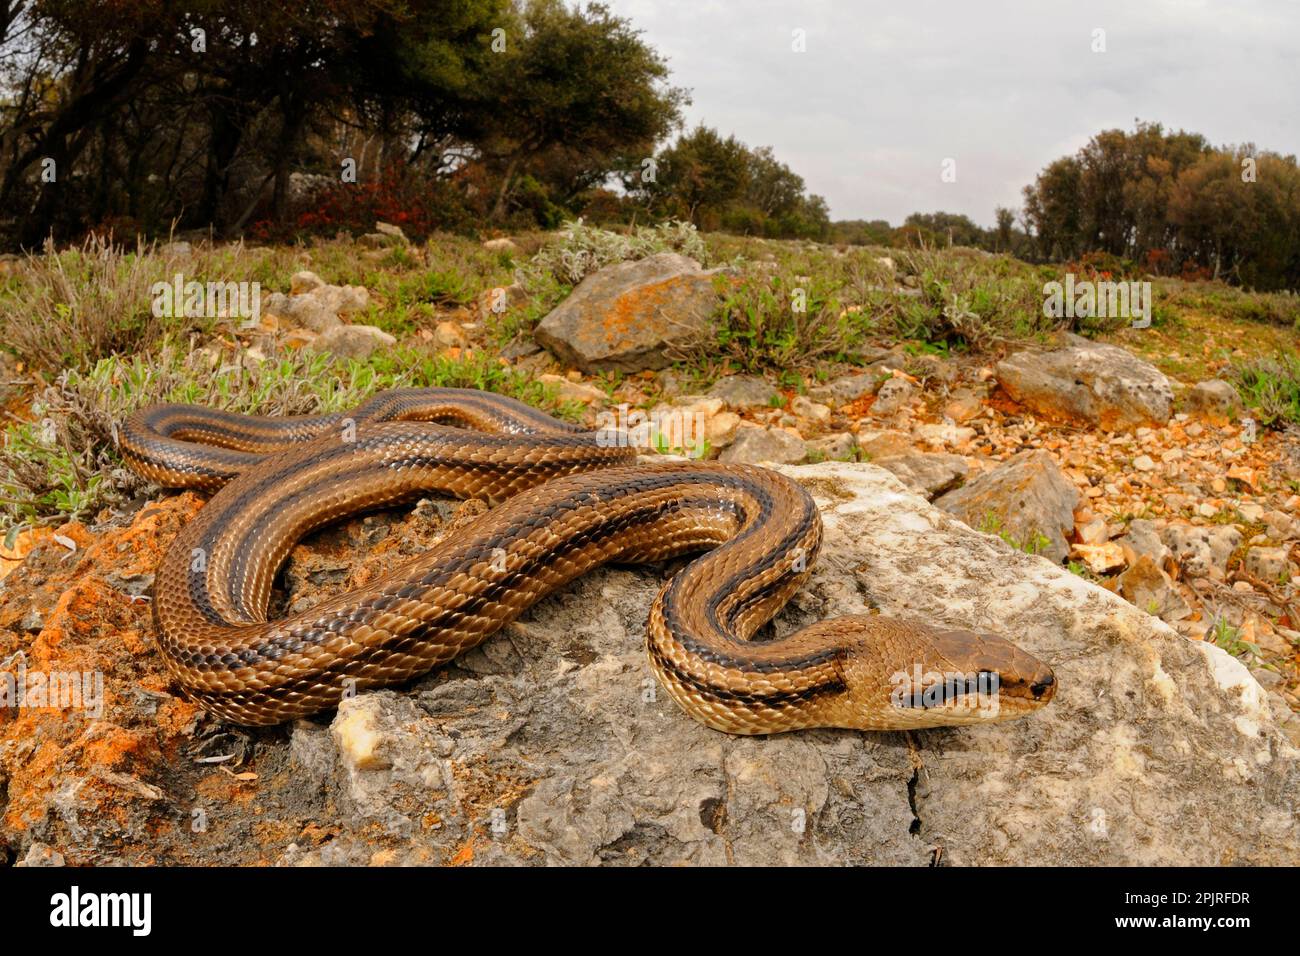 Four-lined Snake (Elaphe quatuorlineata) adult, on rocks in habitat, Croatia Stock Photo